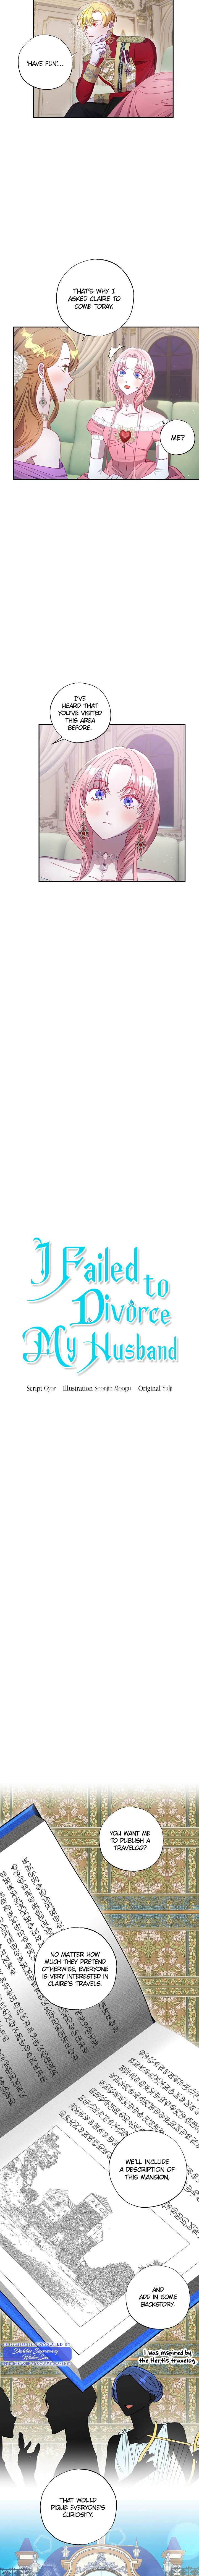 I Failed To Divorce My Husband - Page 2